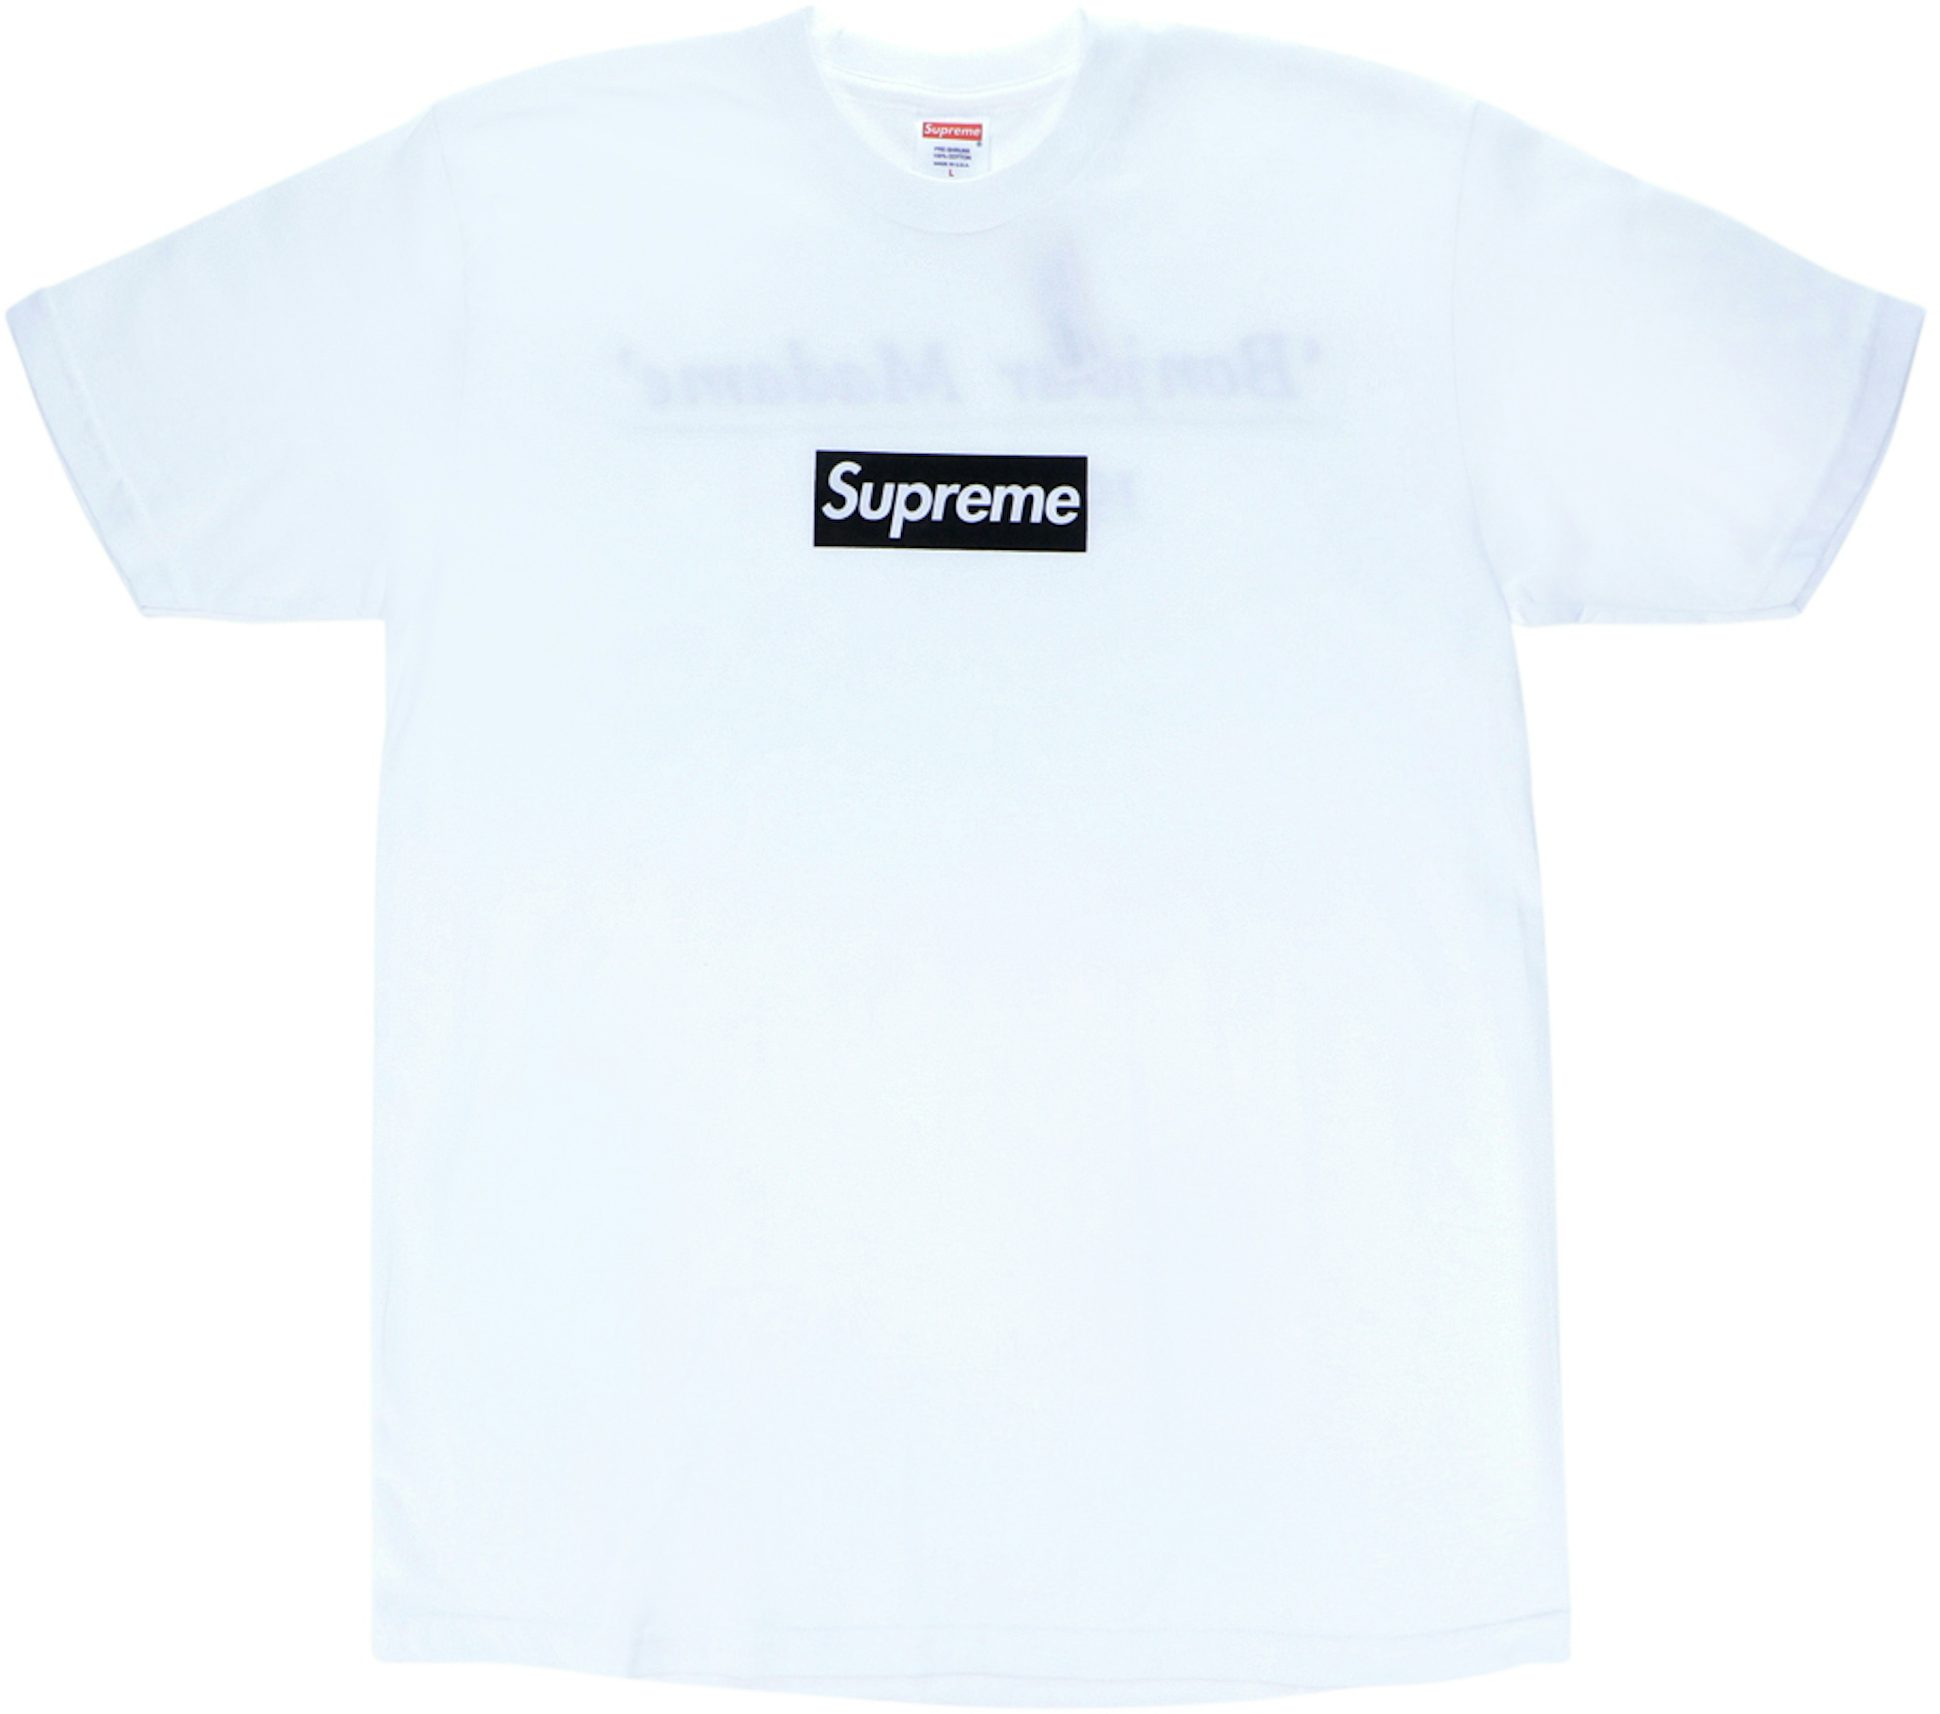 supreme original t shirt price, Off 75%